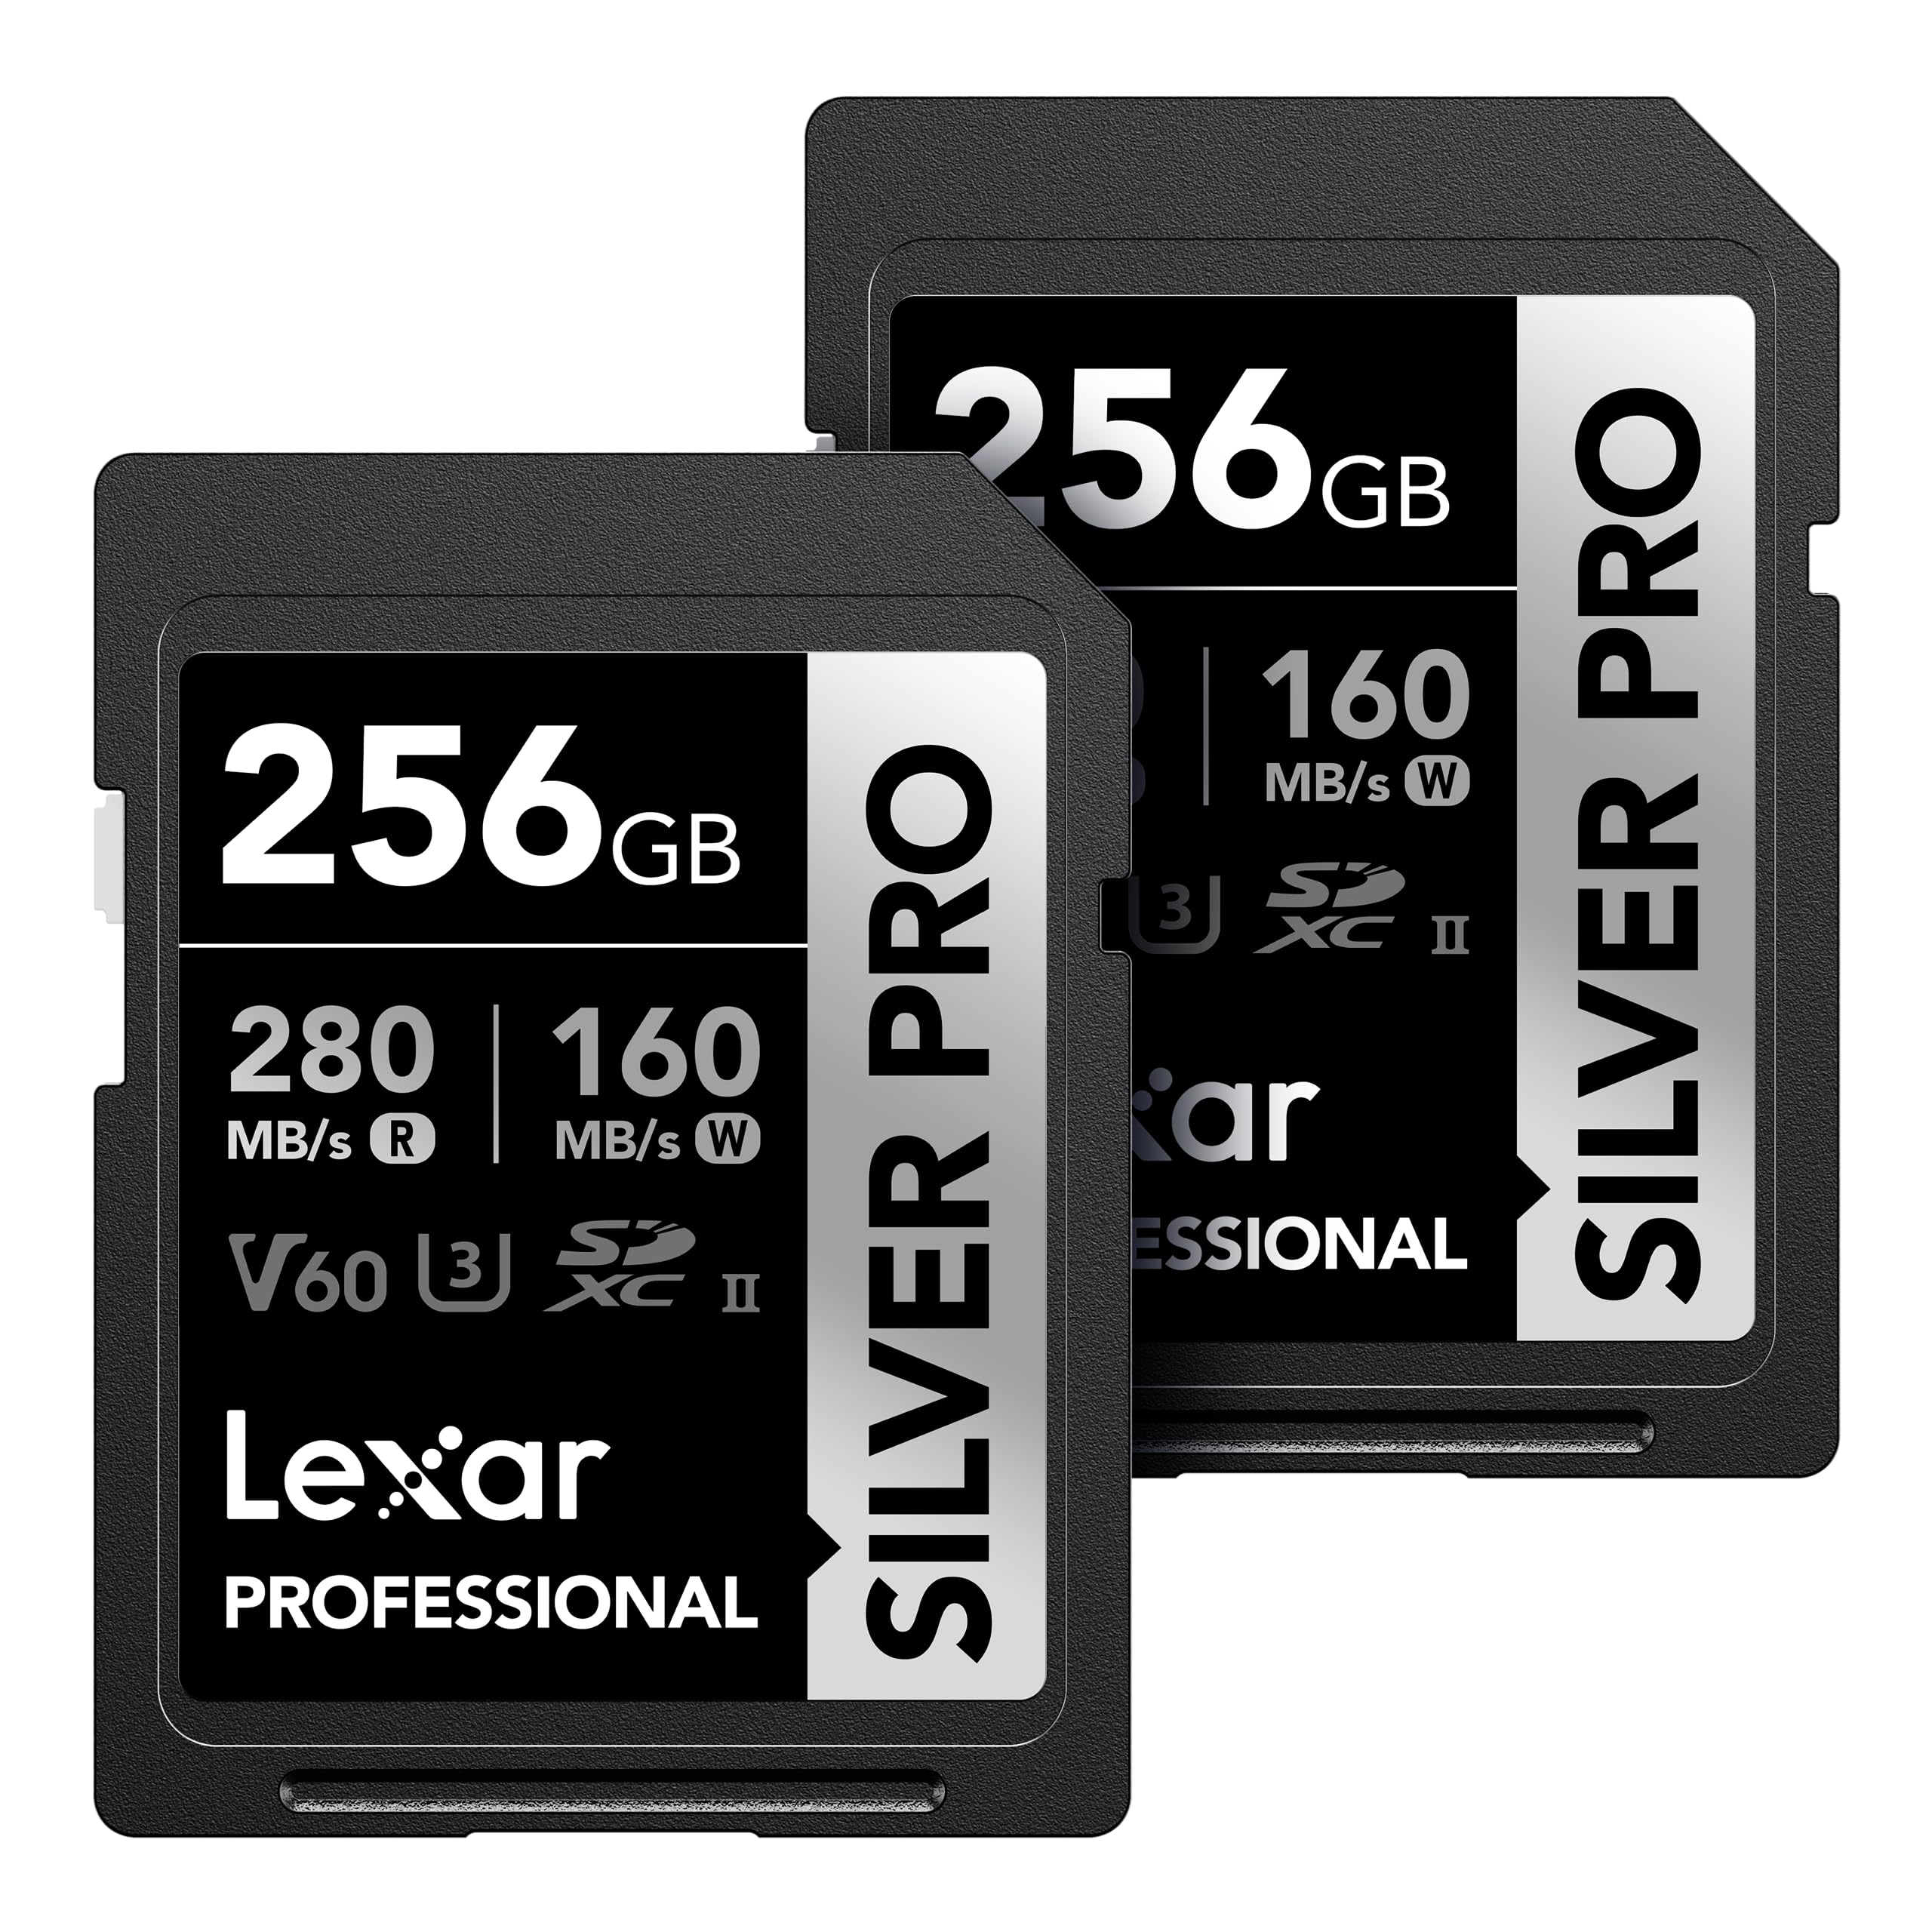 Lexar Professional 256GB (2-Pack) Silver PRO SDXC UHS-II Memory Card, C10, U3, V60, Full-HD & 4K Video, Up to 280MB/s Read, for Professional Photographer, Videographer, Enthusiast (LSDSIPR256G-B2NNU)